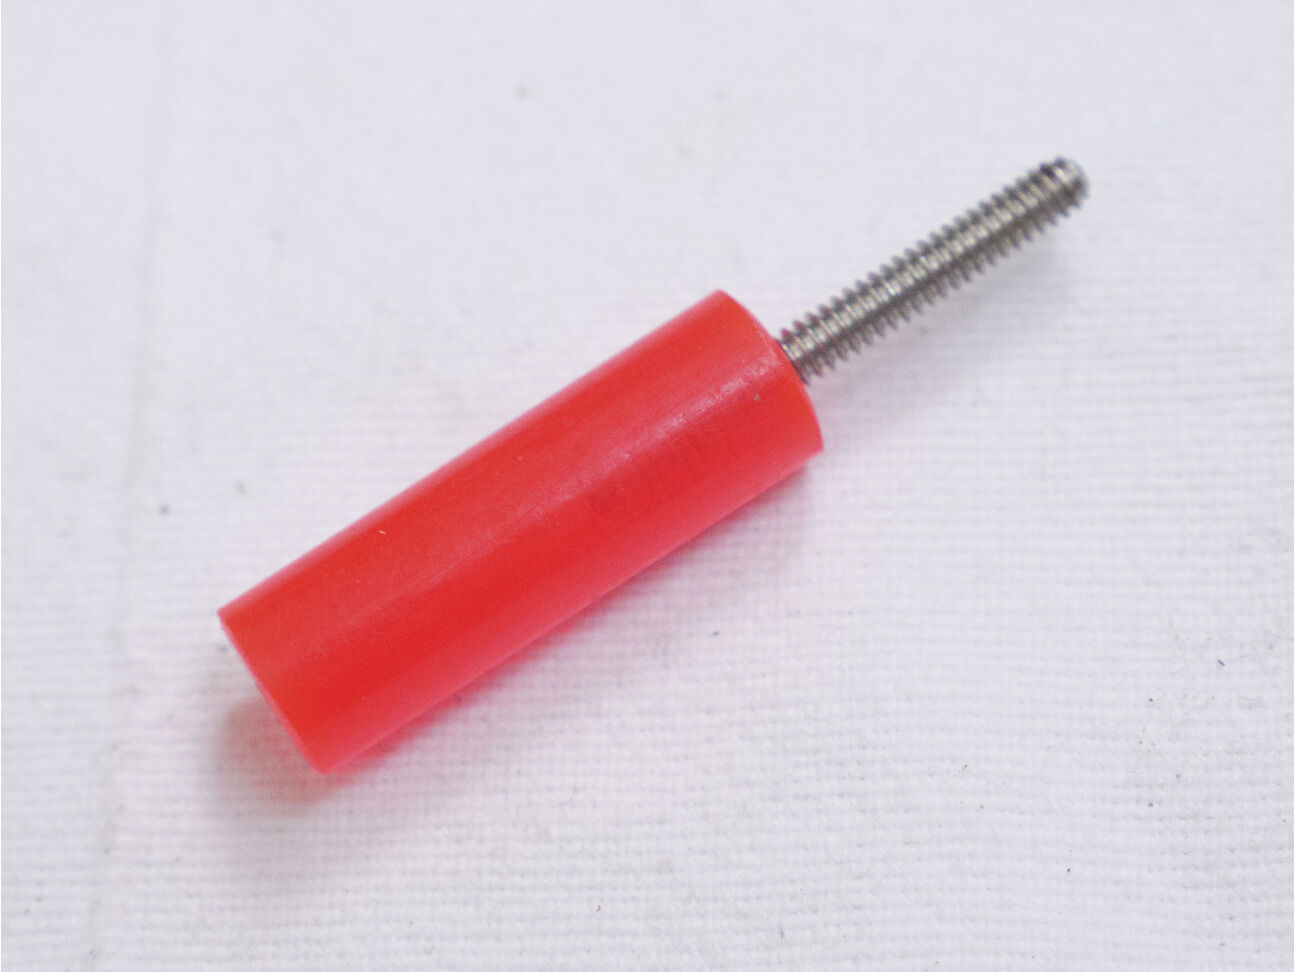 F1 Illistrator hammer bolt linkage pin remover screw